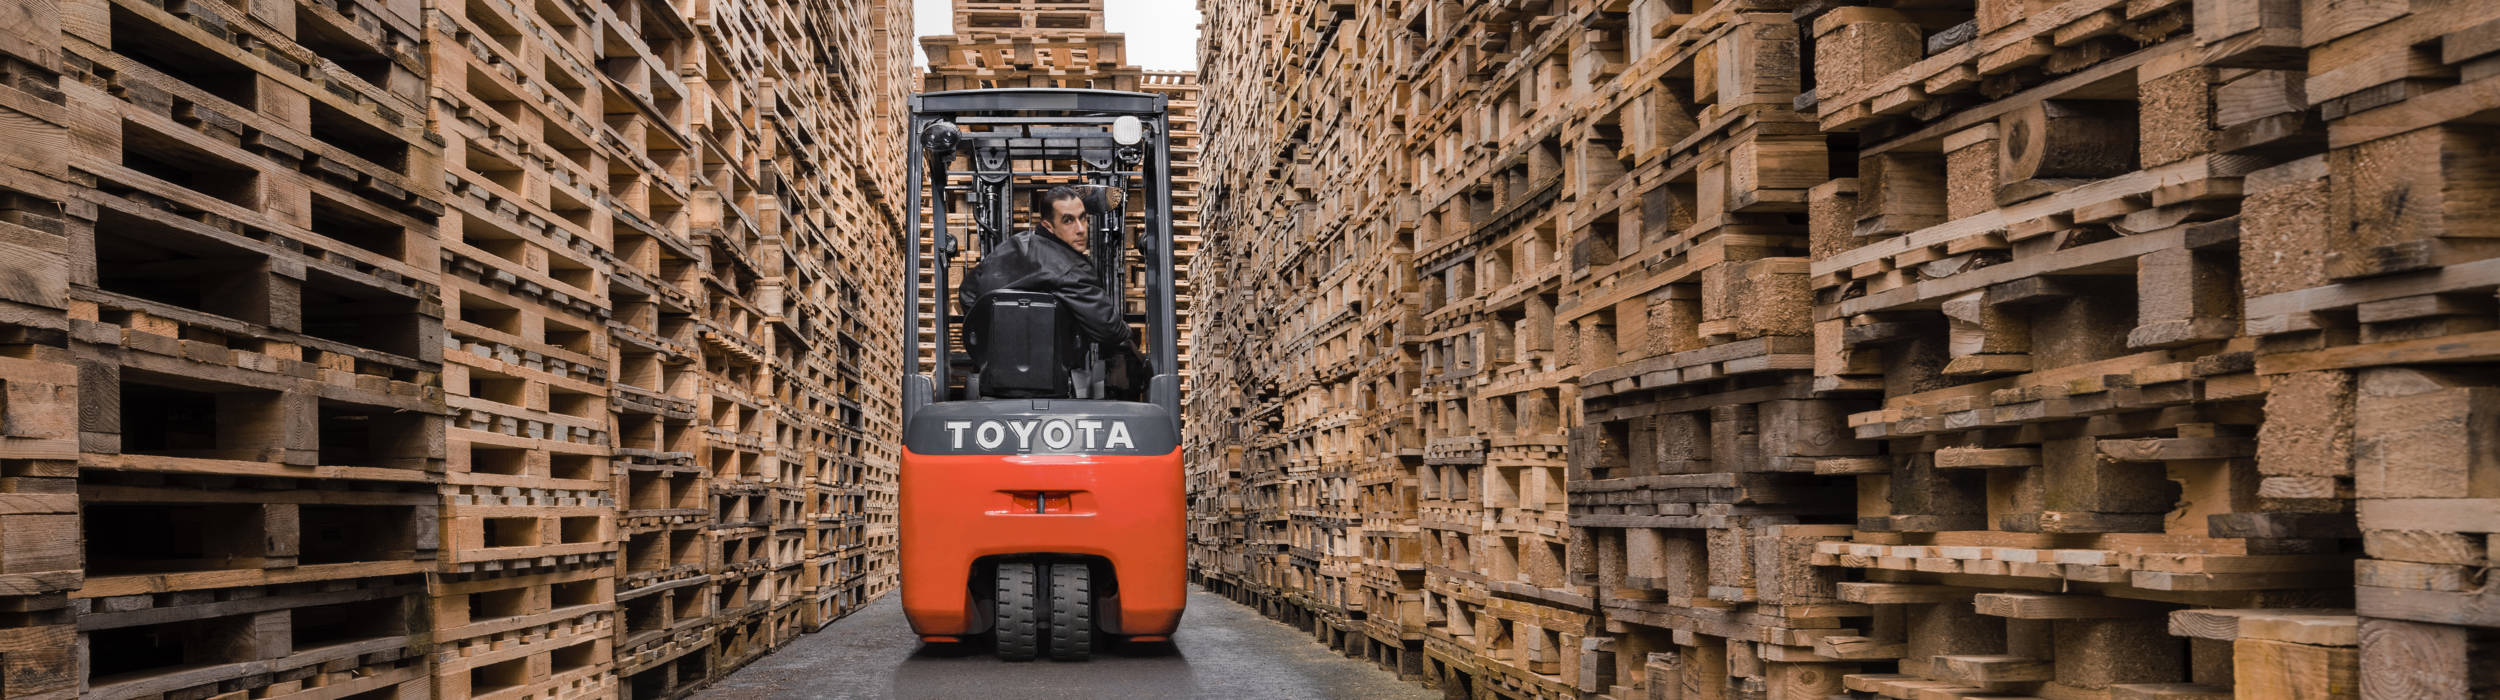 Toyota Material Handling: carrello in retromarcia tra pallet